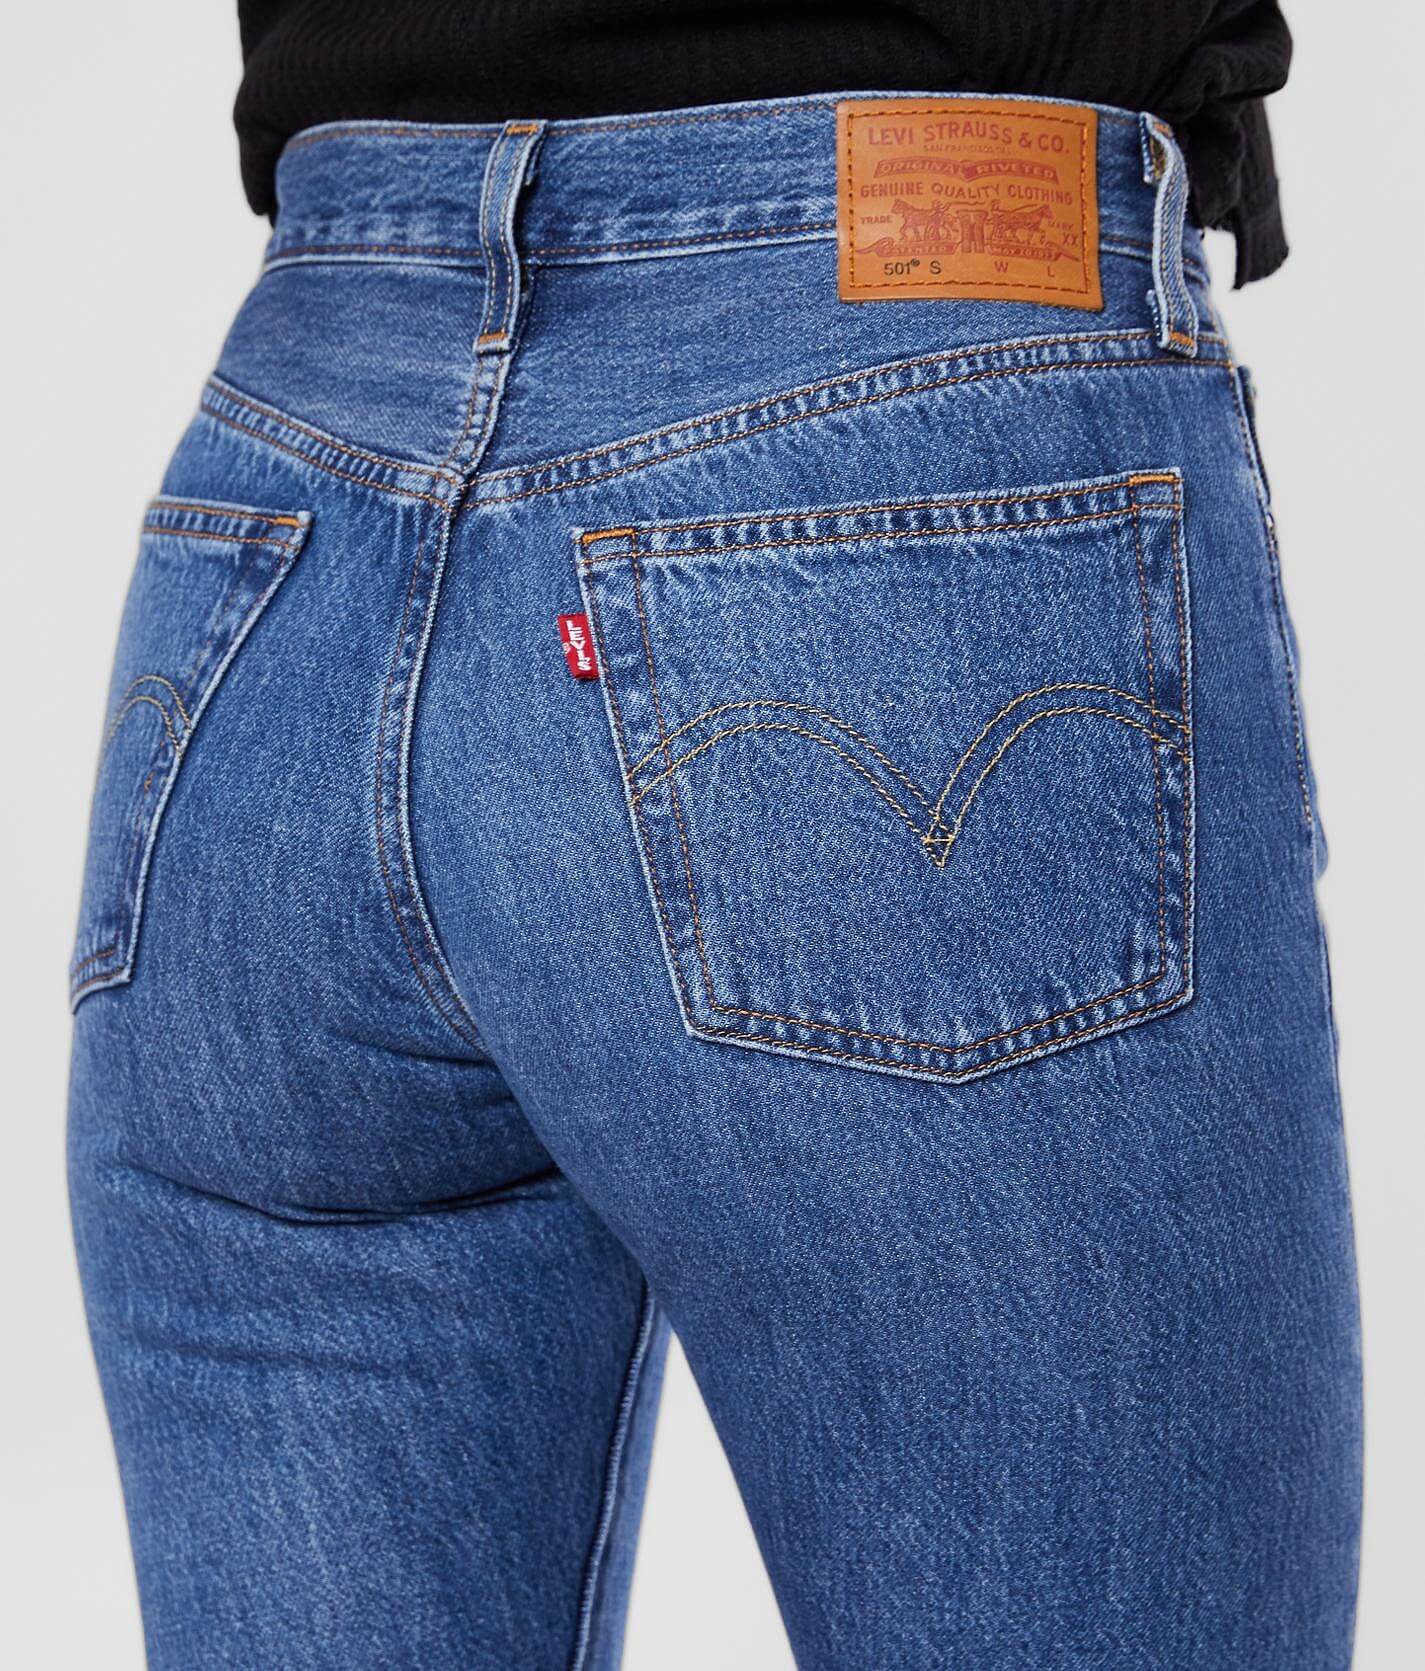 levi's 501 customized skinny jeans 